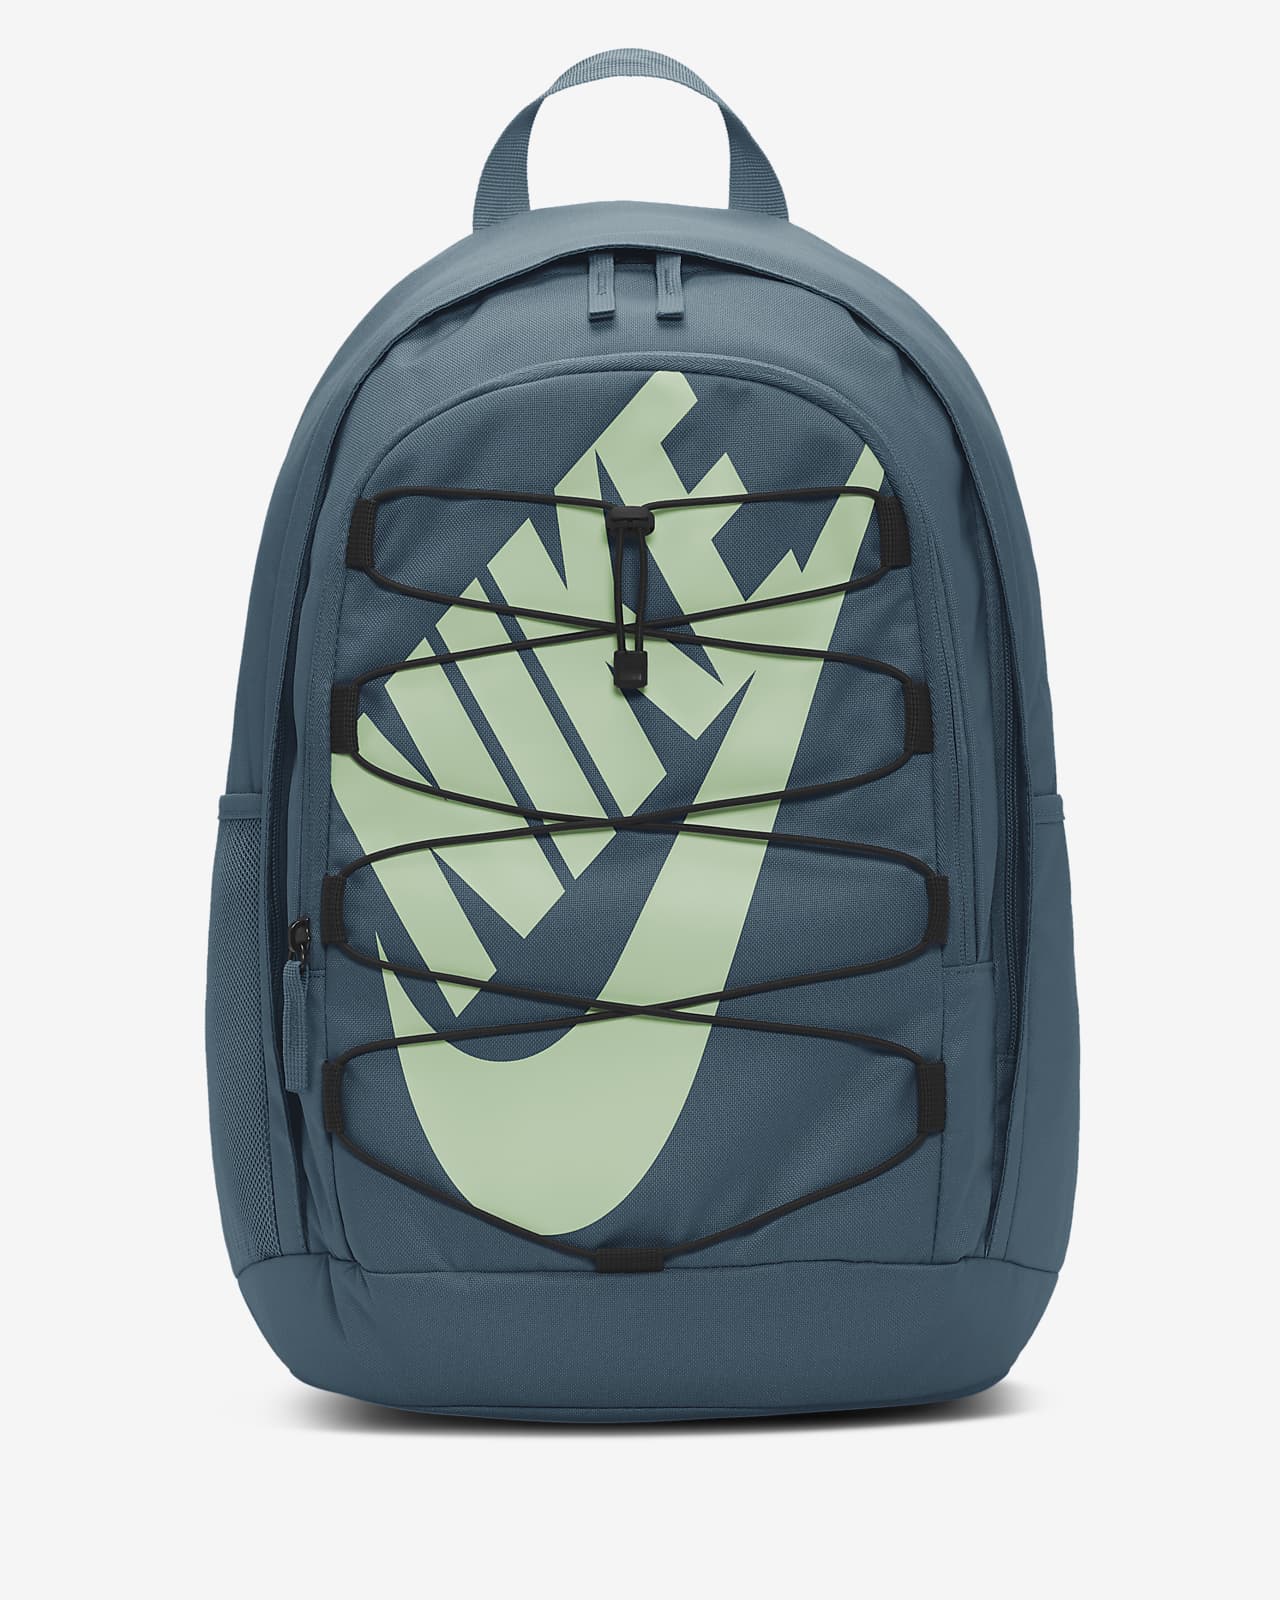 light grey nike backpack